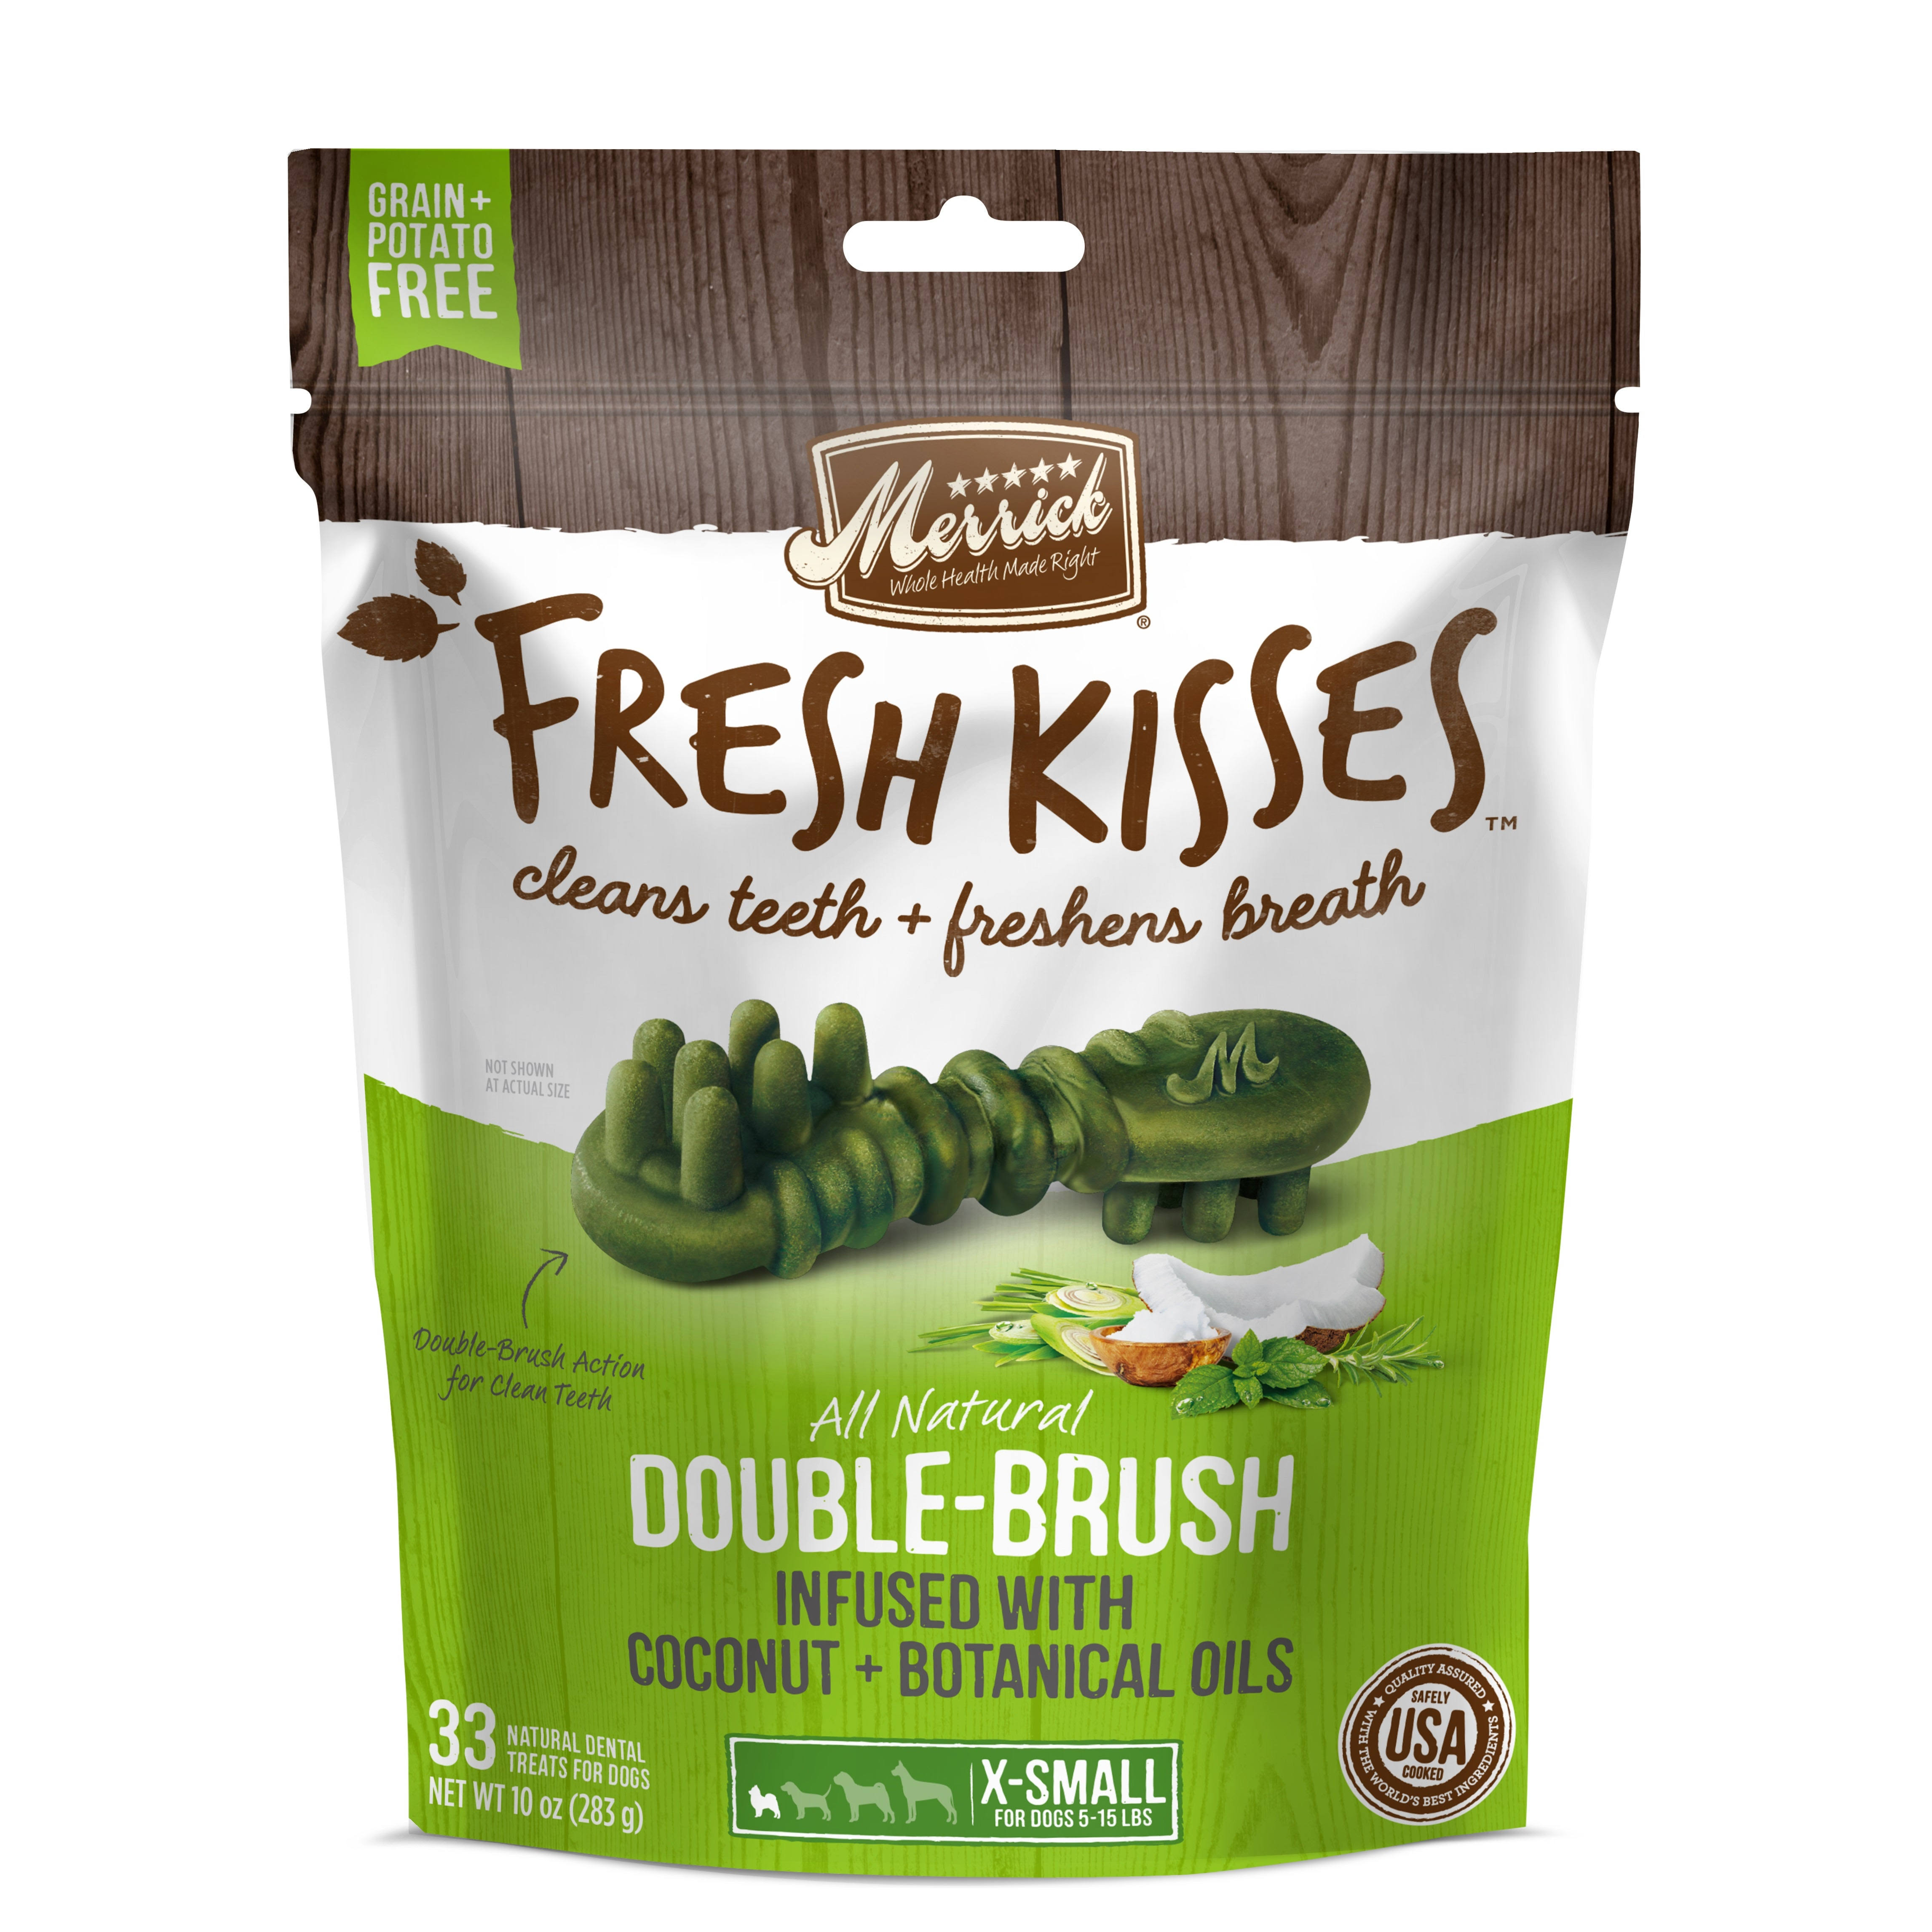 Merrick Fresh Kisses Dental Treats, for Dogs, 5-15 lbs, Coconut + Botanical Oils, Double-Brush, X-Small - 20 treats, 6 oz